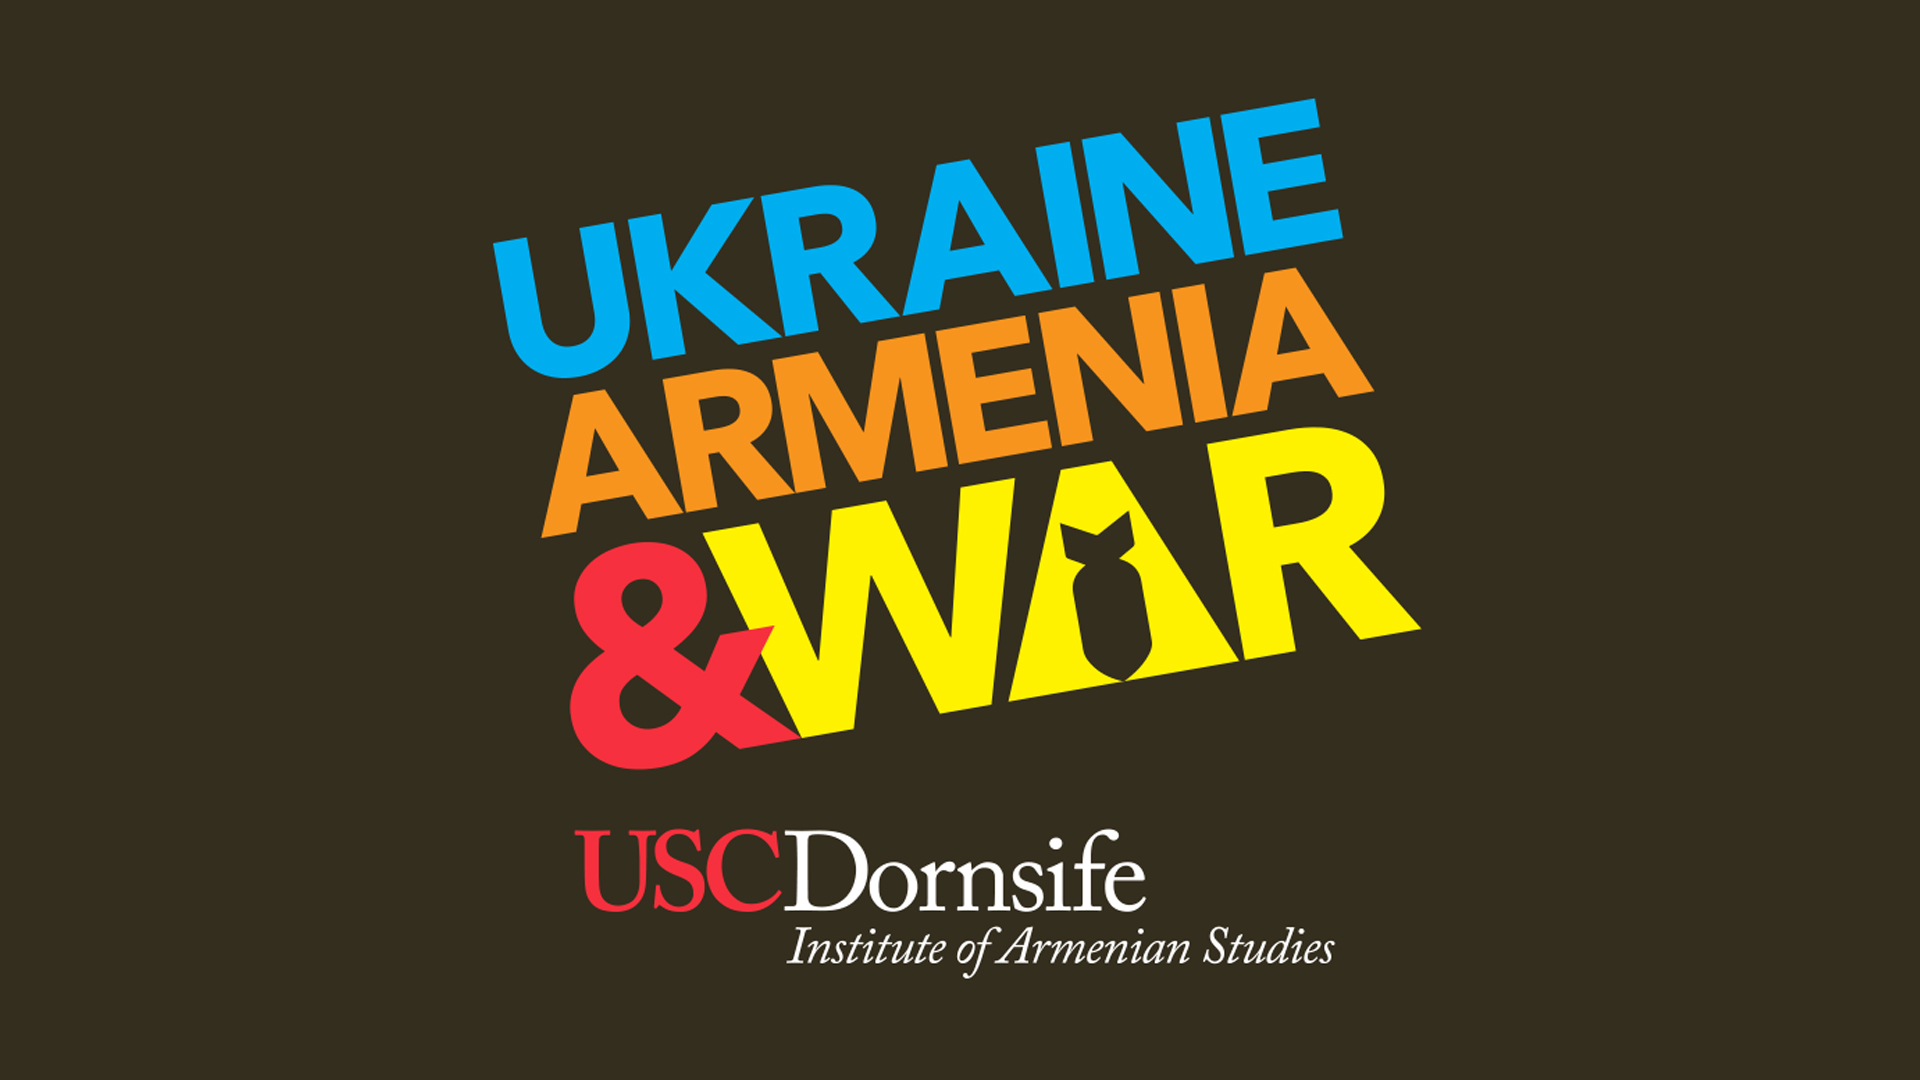 Money Matters: Ukraine, Armenia & War